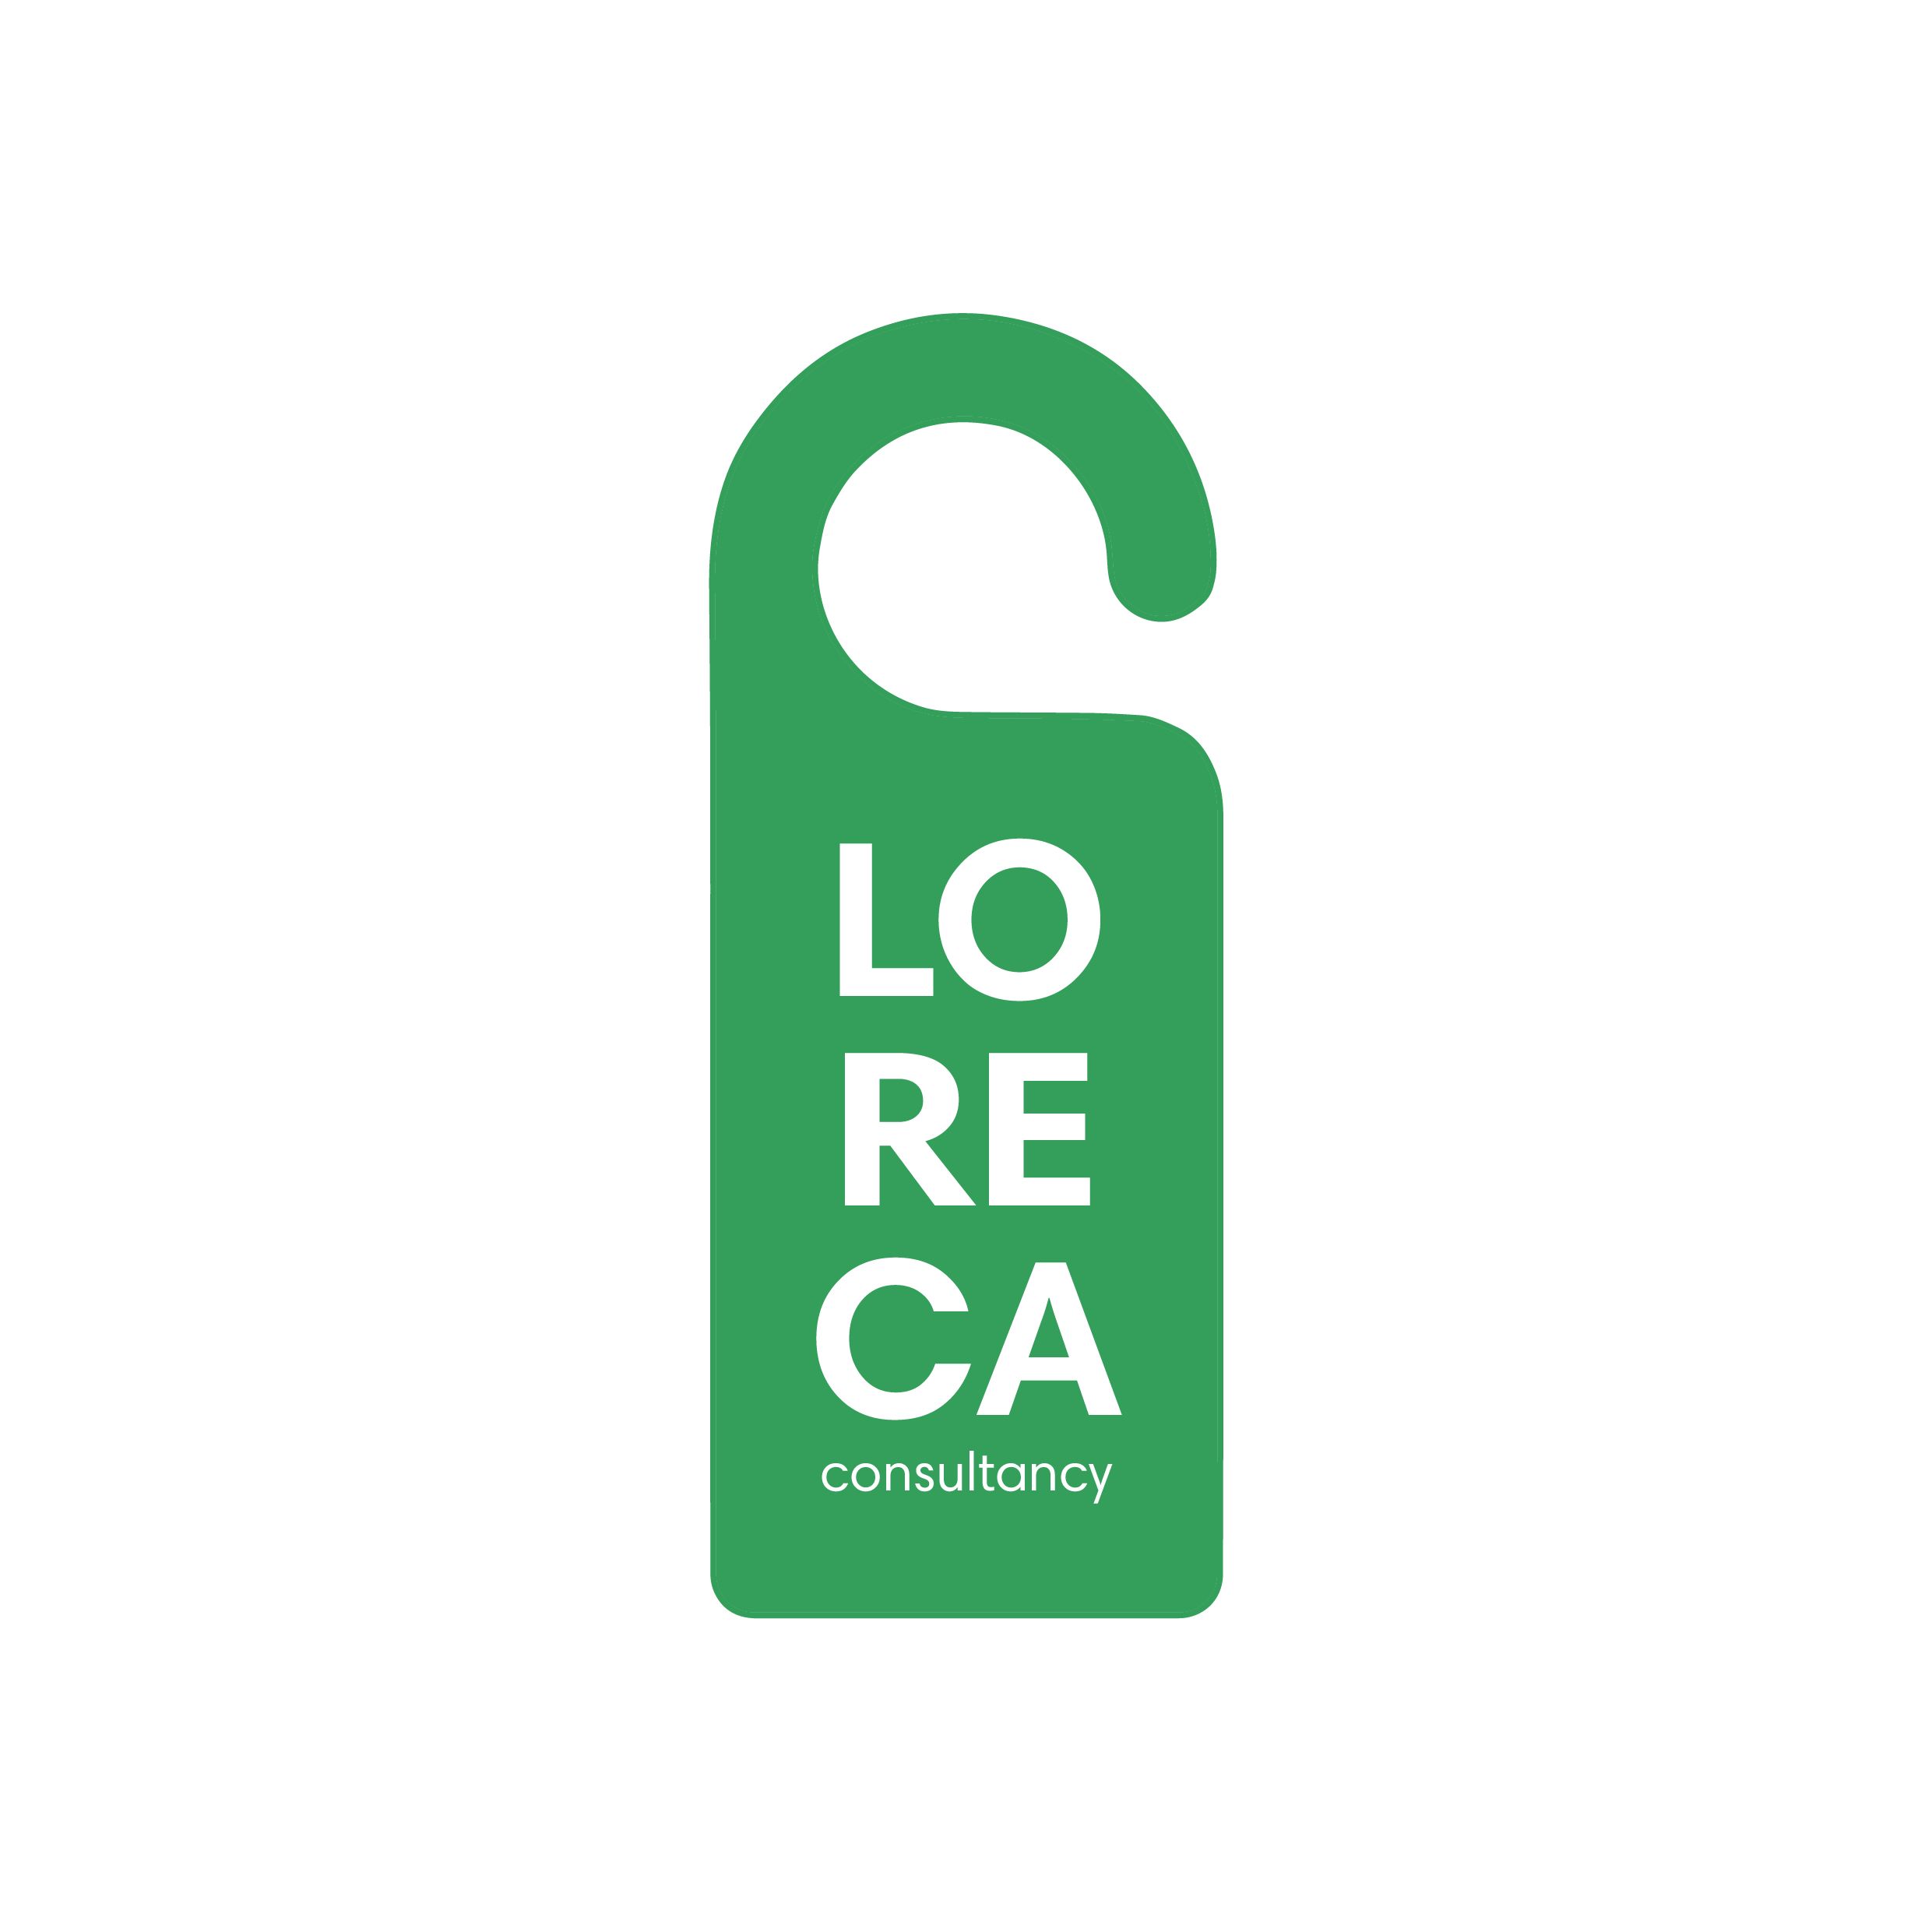 Loreca